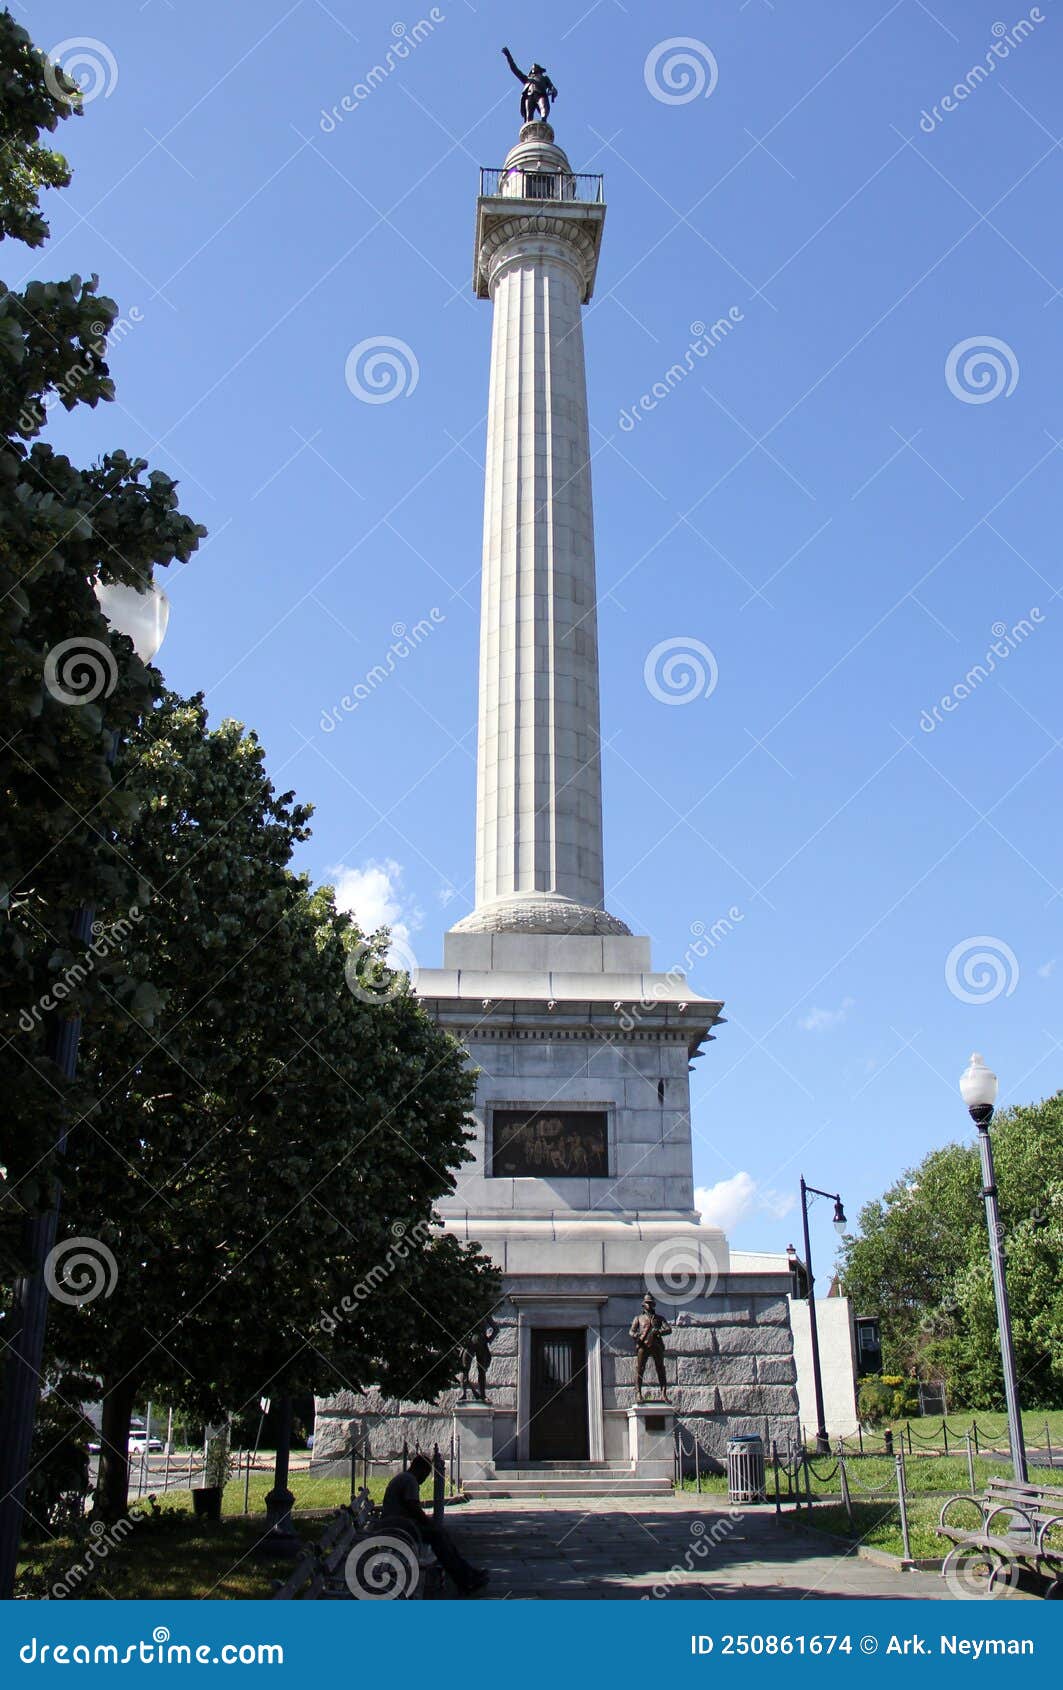 battle monument, commemorates the december 26, 1776 battle of trenton